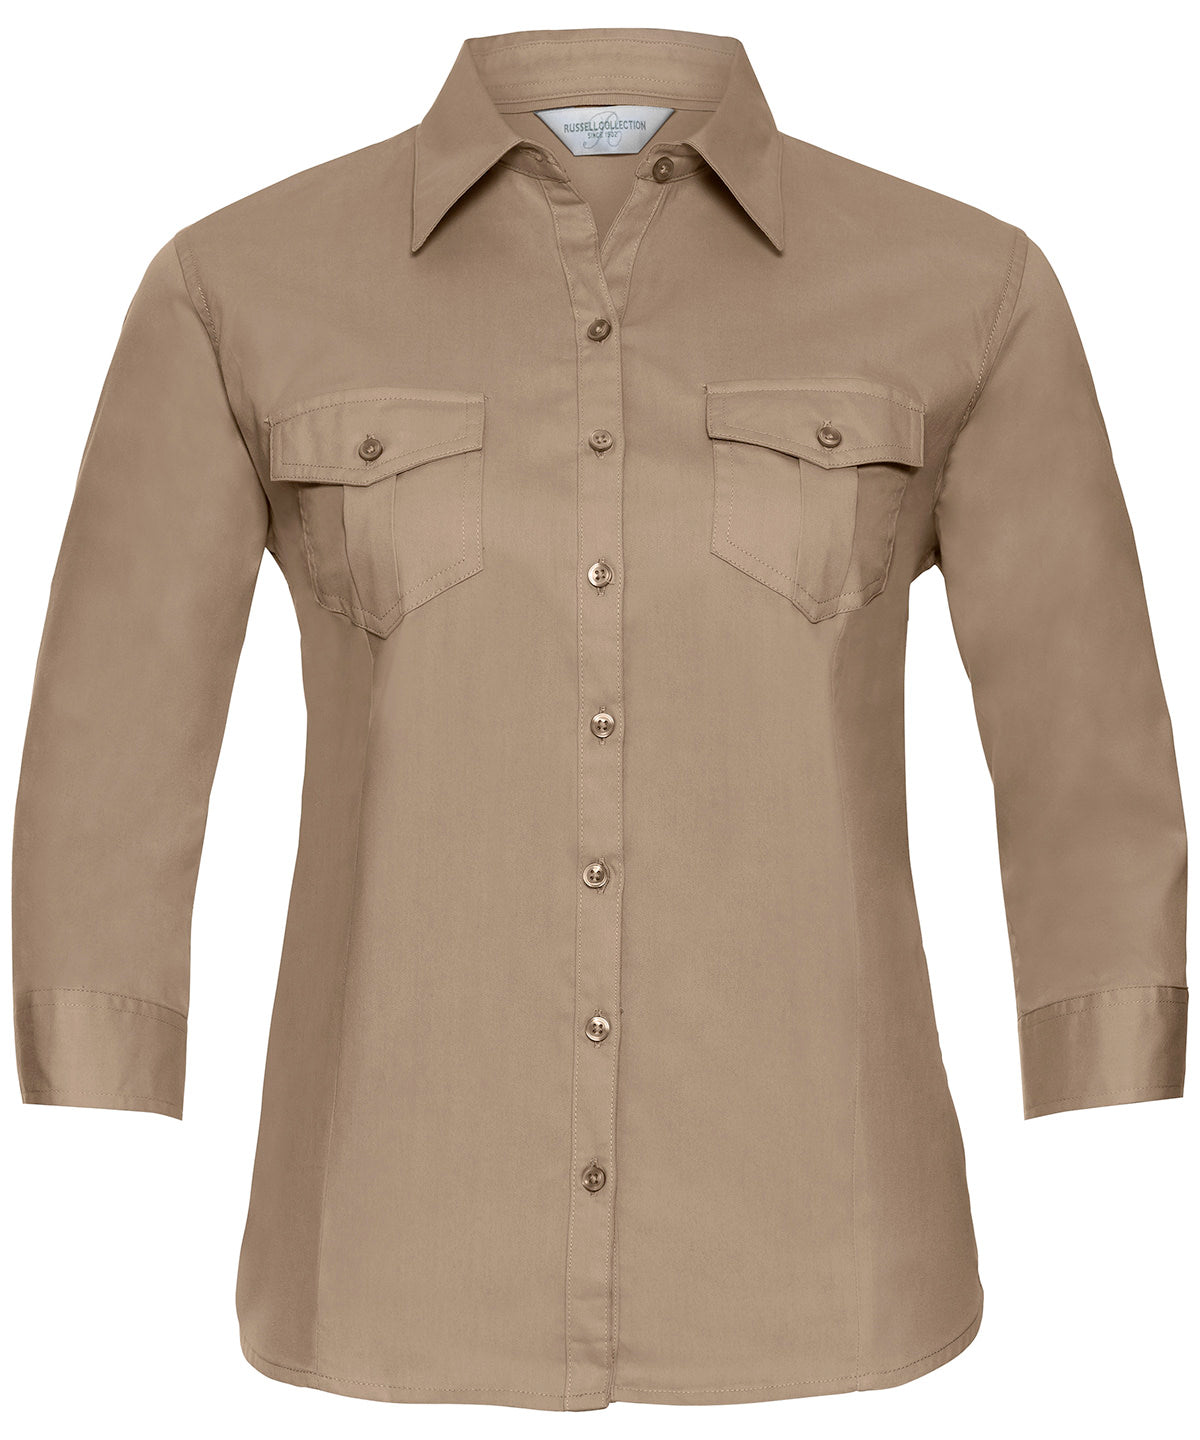 Bolir - Women's Roll-sleeve ¾ Sleeve Shirt